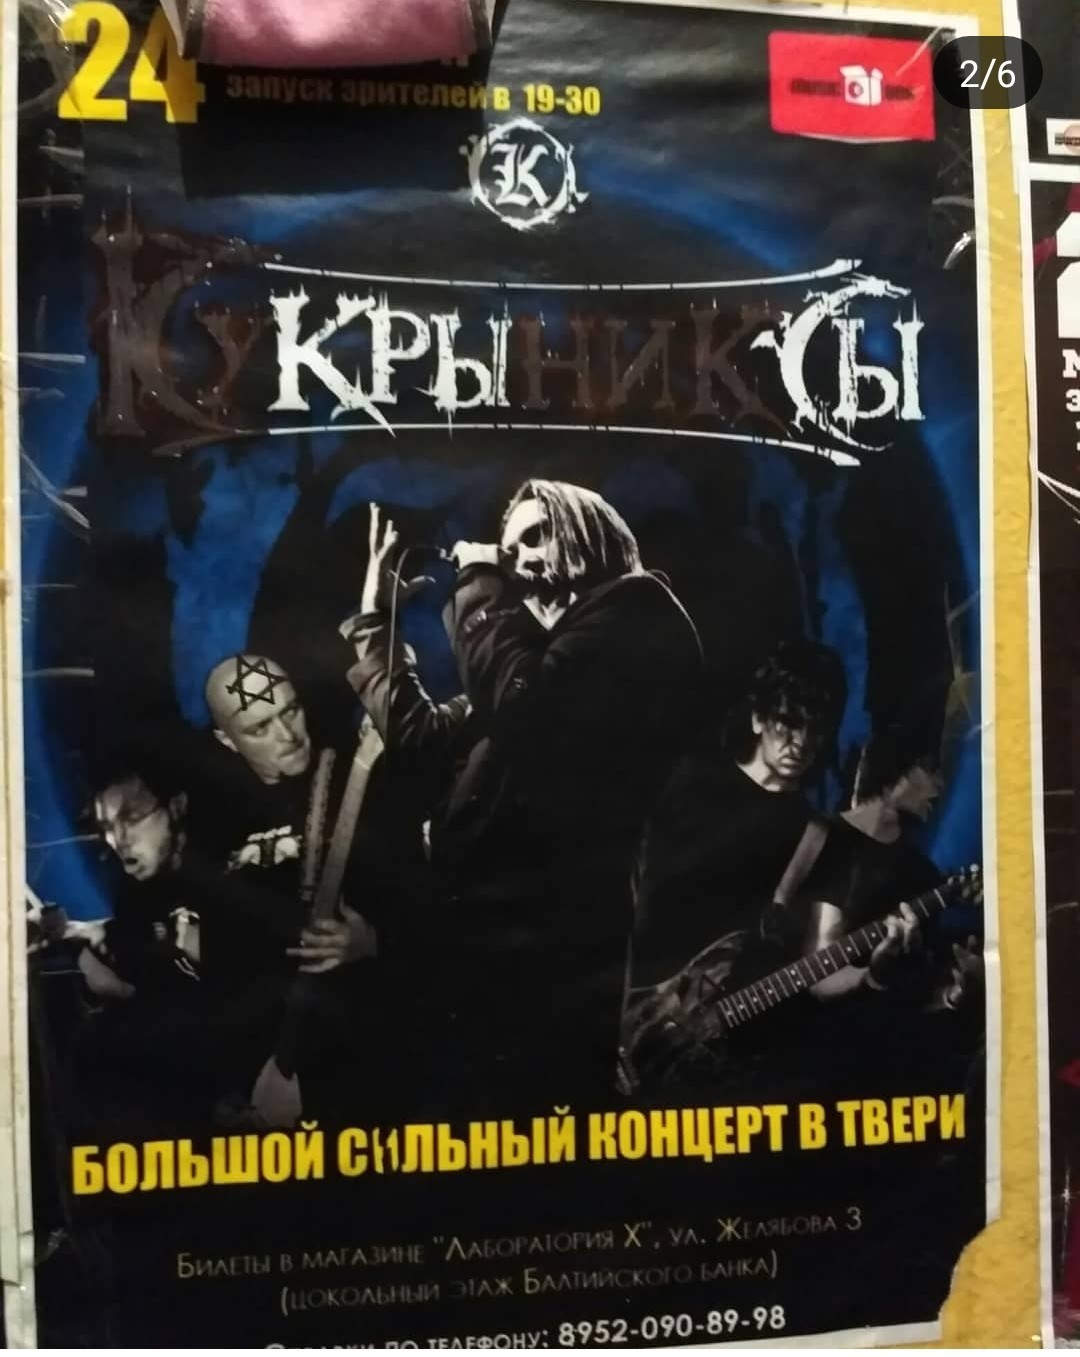 Cultural life of Tver. - Poster, Vandalism, Hooliganism, Longpost